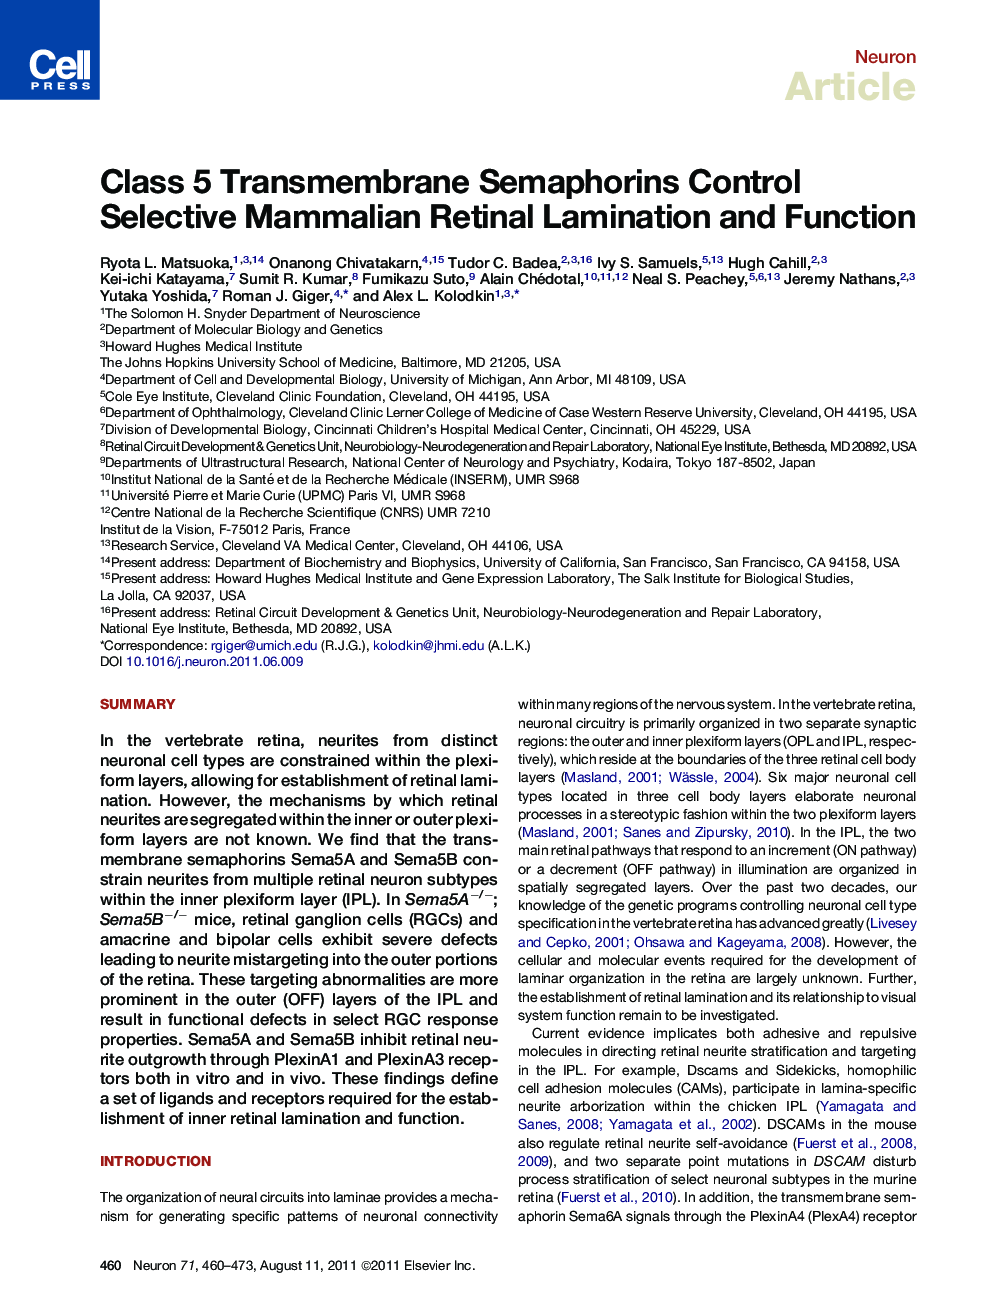 Class 5 Transmembrane Semaphorins Control Selective Mammalian Retinal Lamination and Function